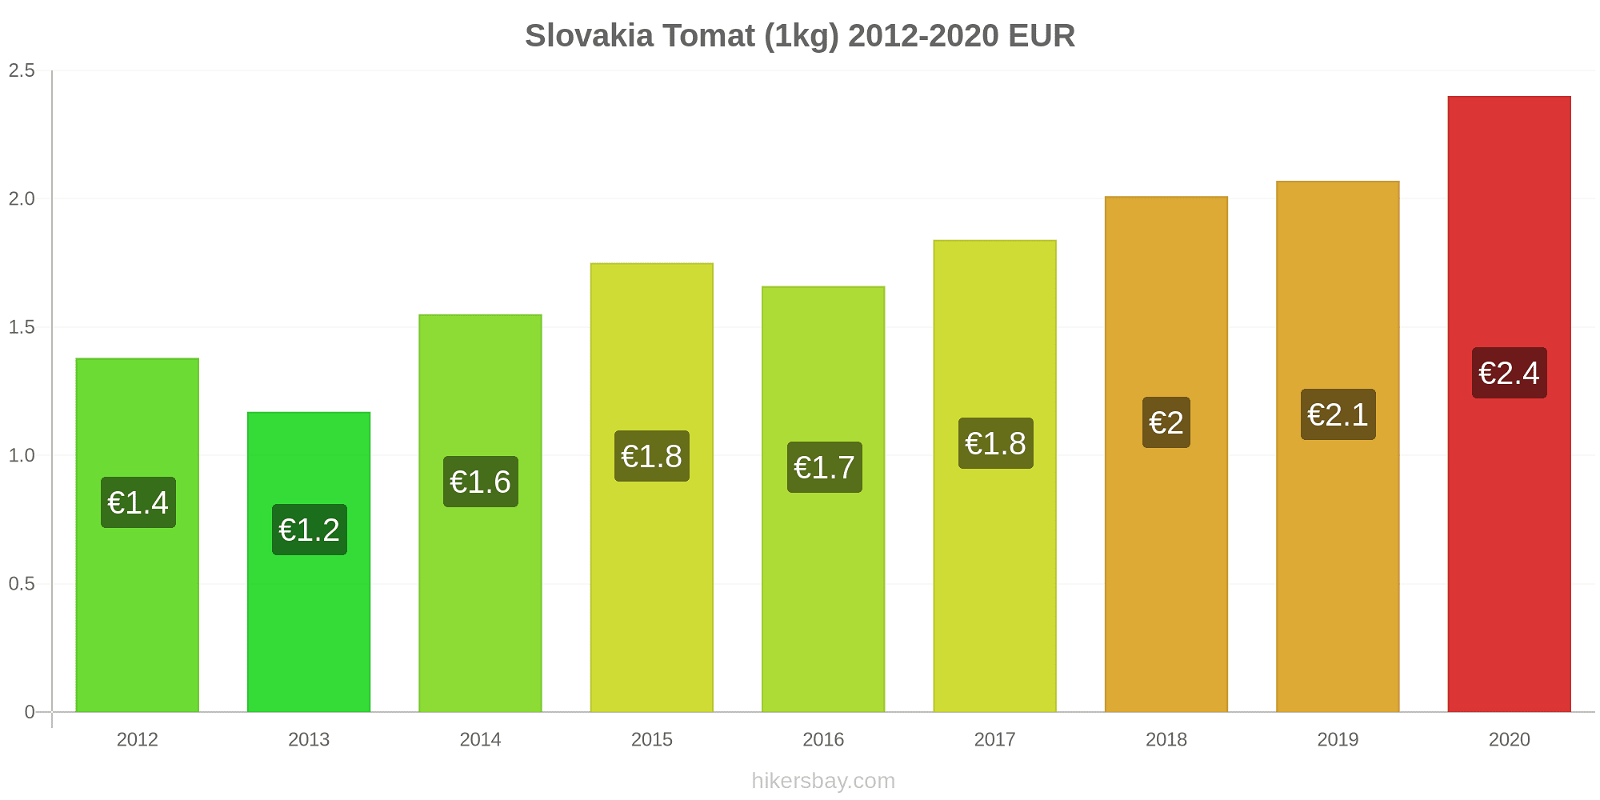 Slovakia prisendringer Tomat (1kg) hikersbay.com